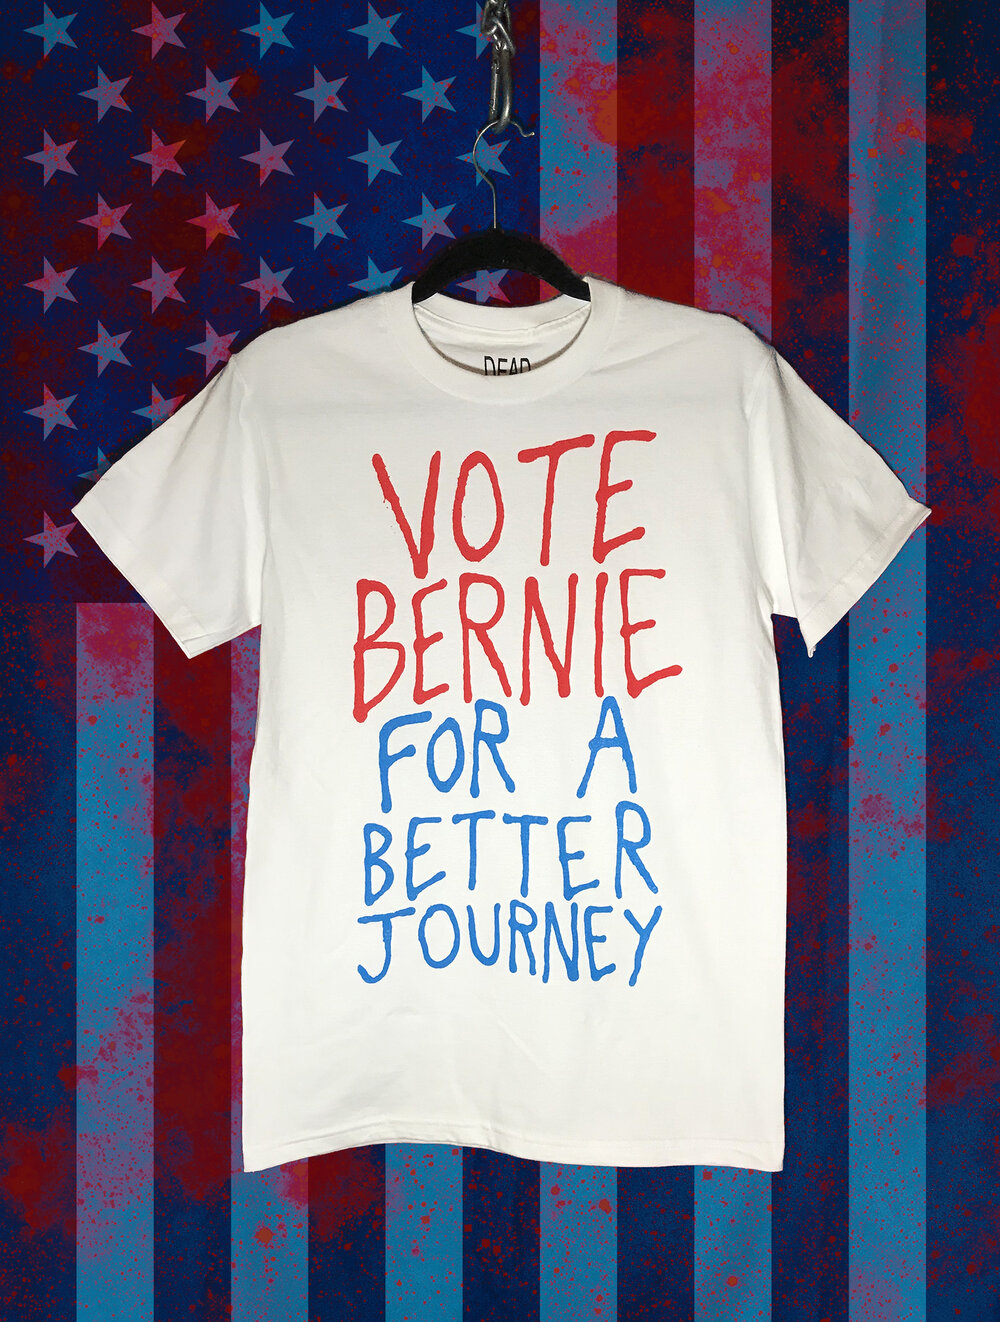 100% Certified Organic Ringspun Cotton T-Shirt Vintage Inspired Vote Bernie 2020 